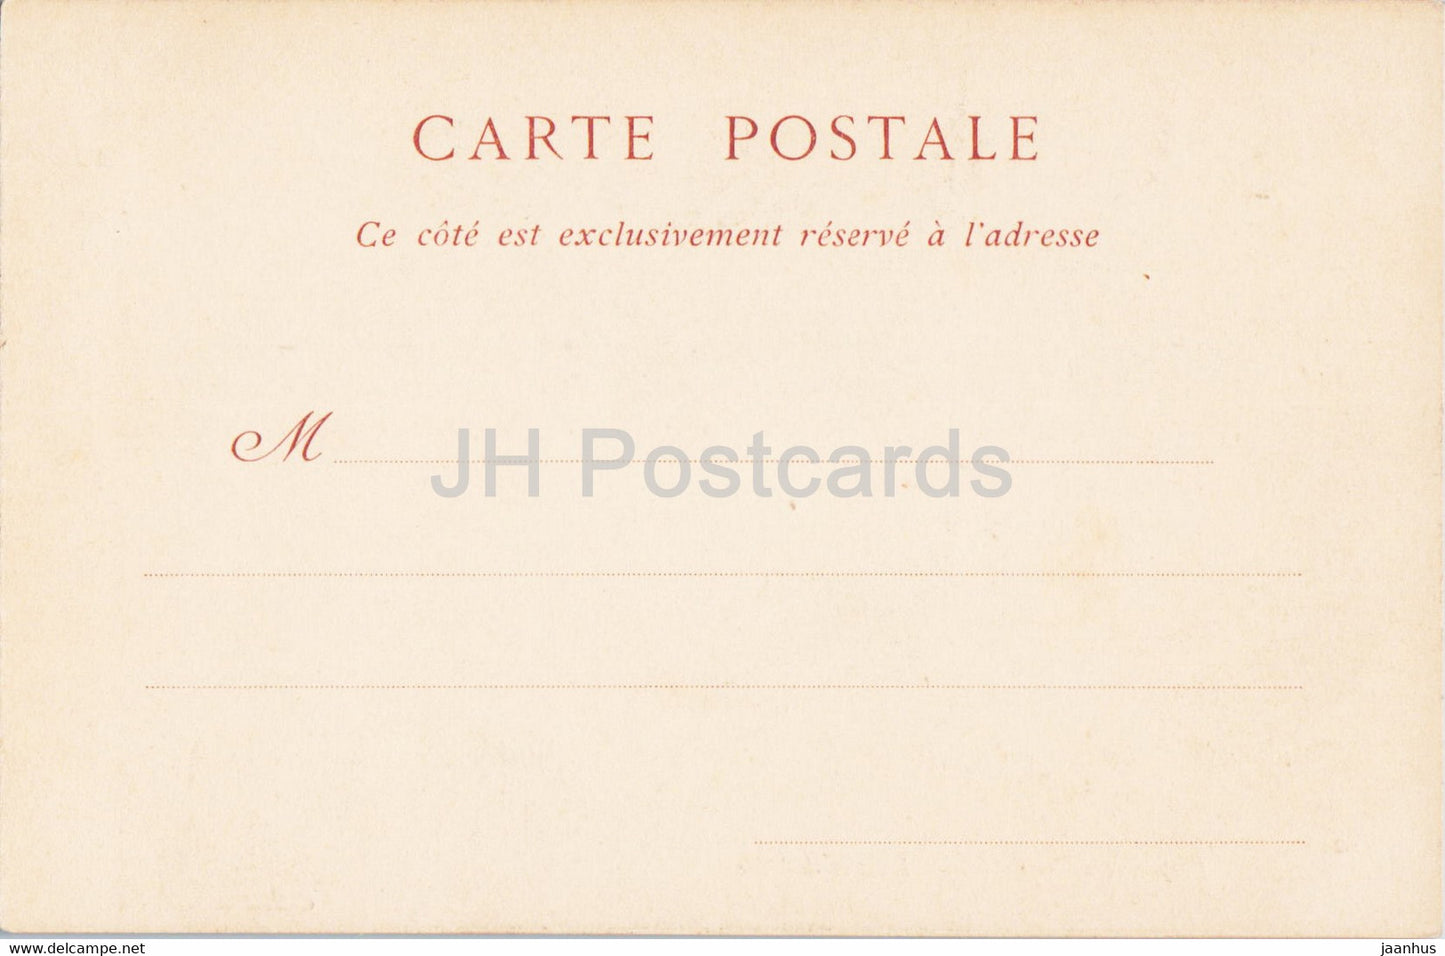 Fontainebleau - L'Hotel de Ville - 78 - old postcard - France - unused